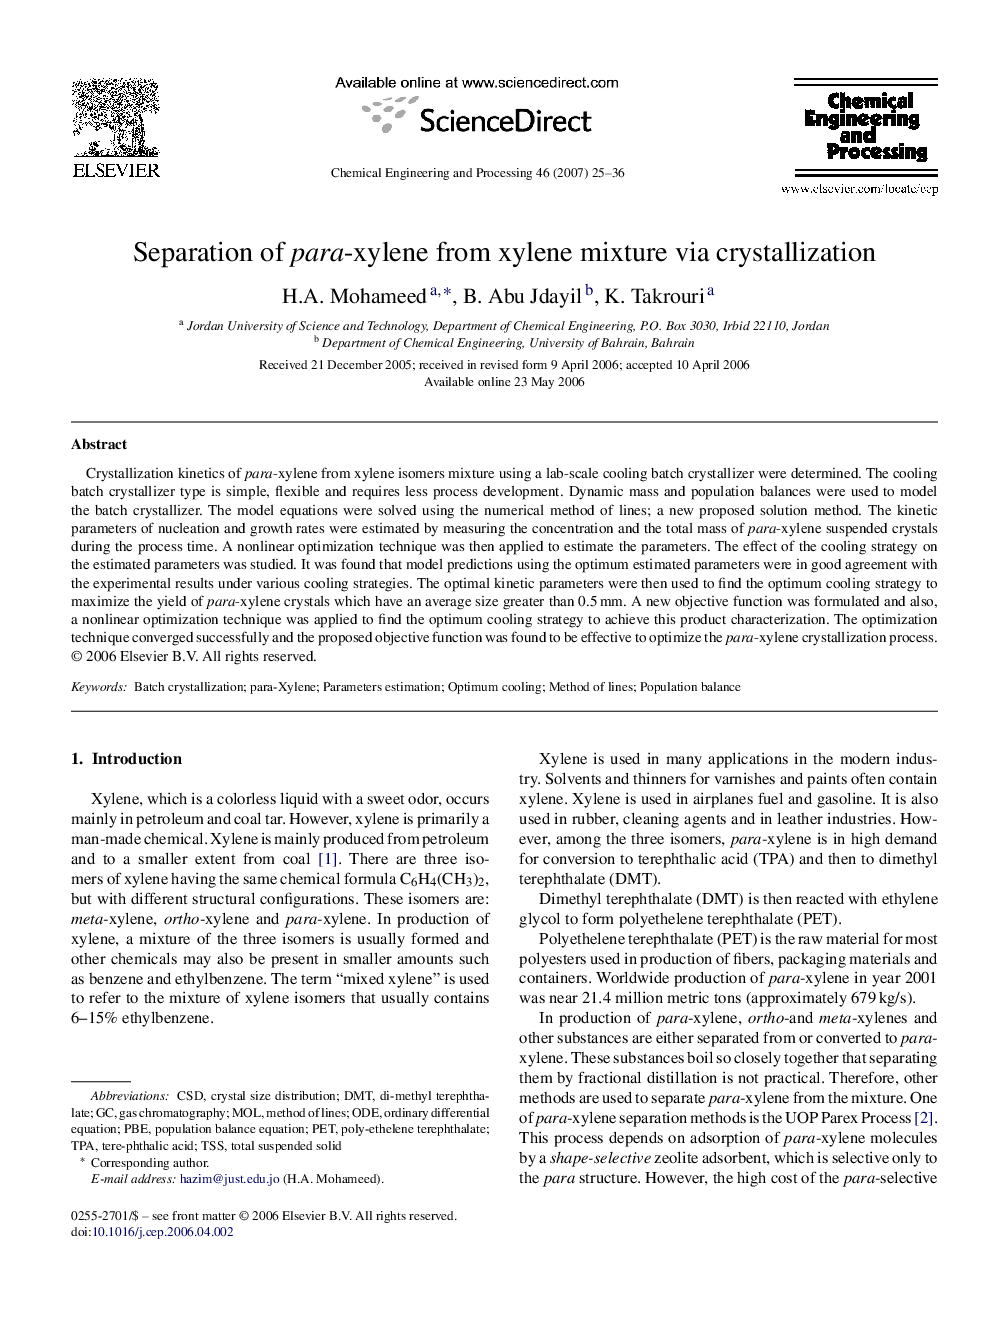 Separation of para-xylene from xylene mixture via crystallization